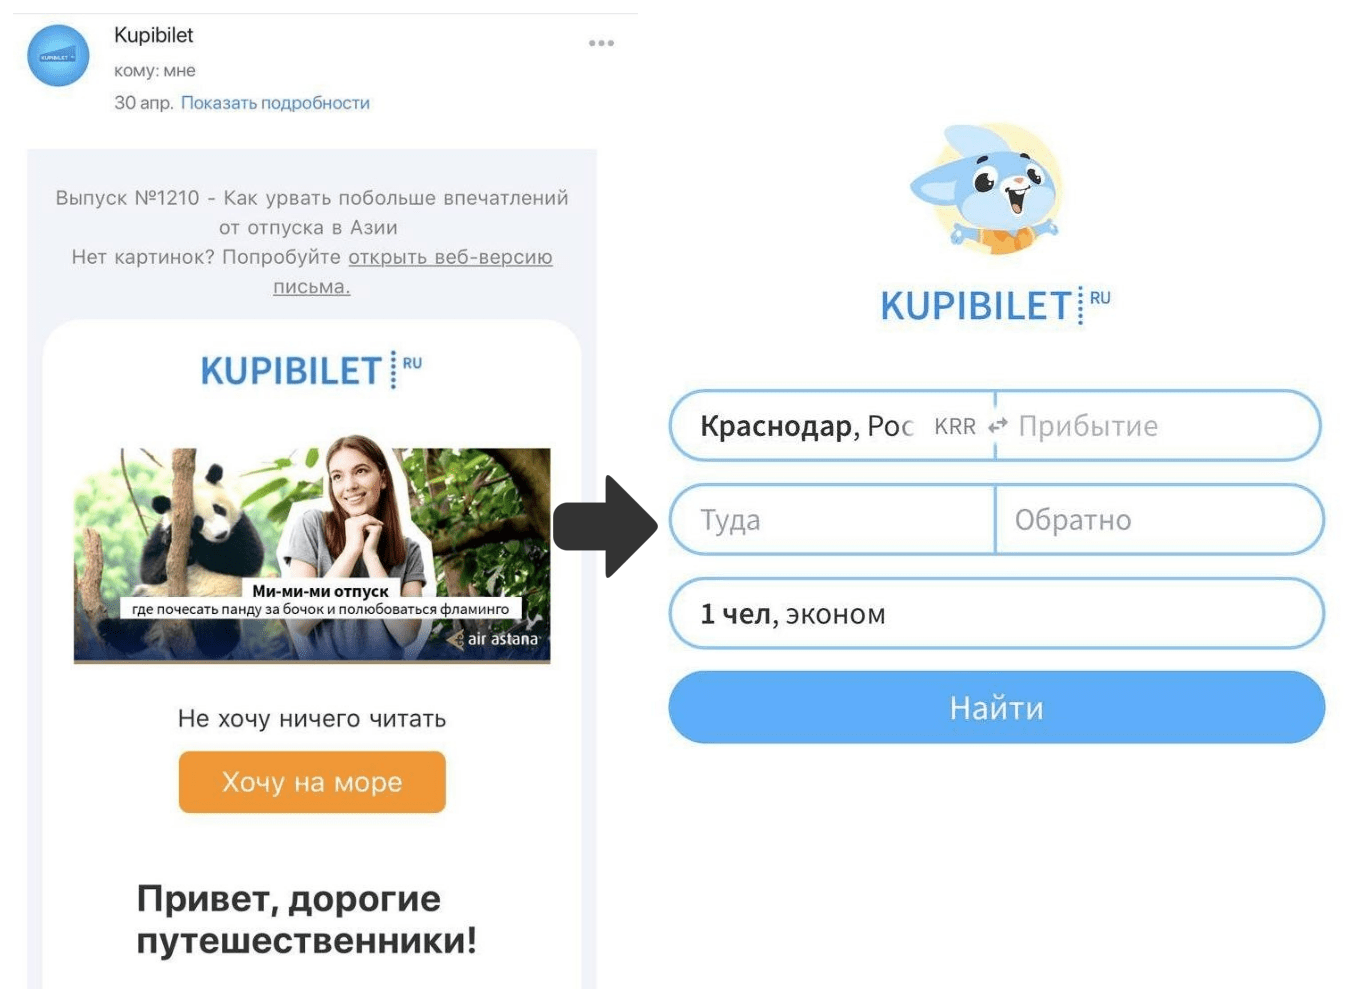 Сайт kupibilet ru. Купибилет приложение. Купибилет номер телефона. Купибилет ру. Купибилет.